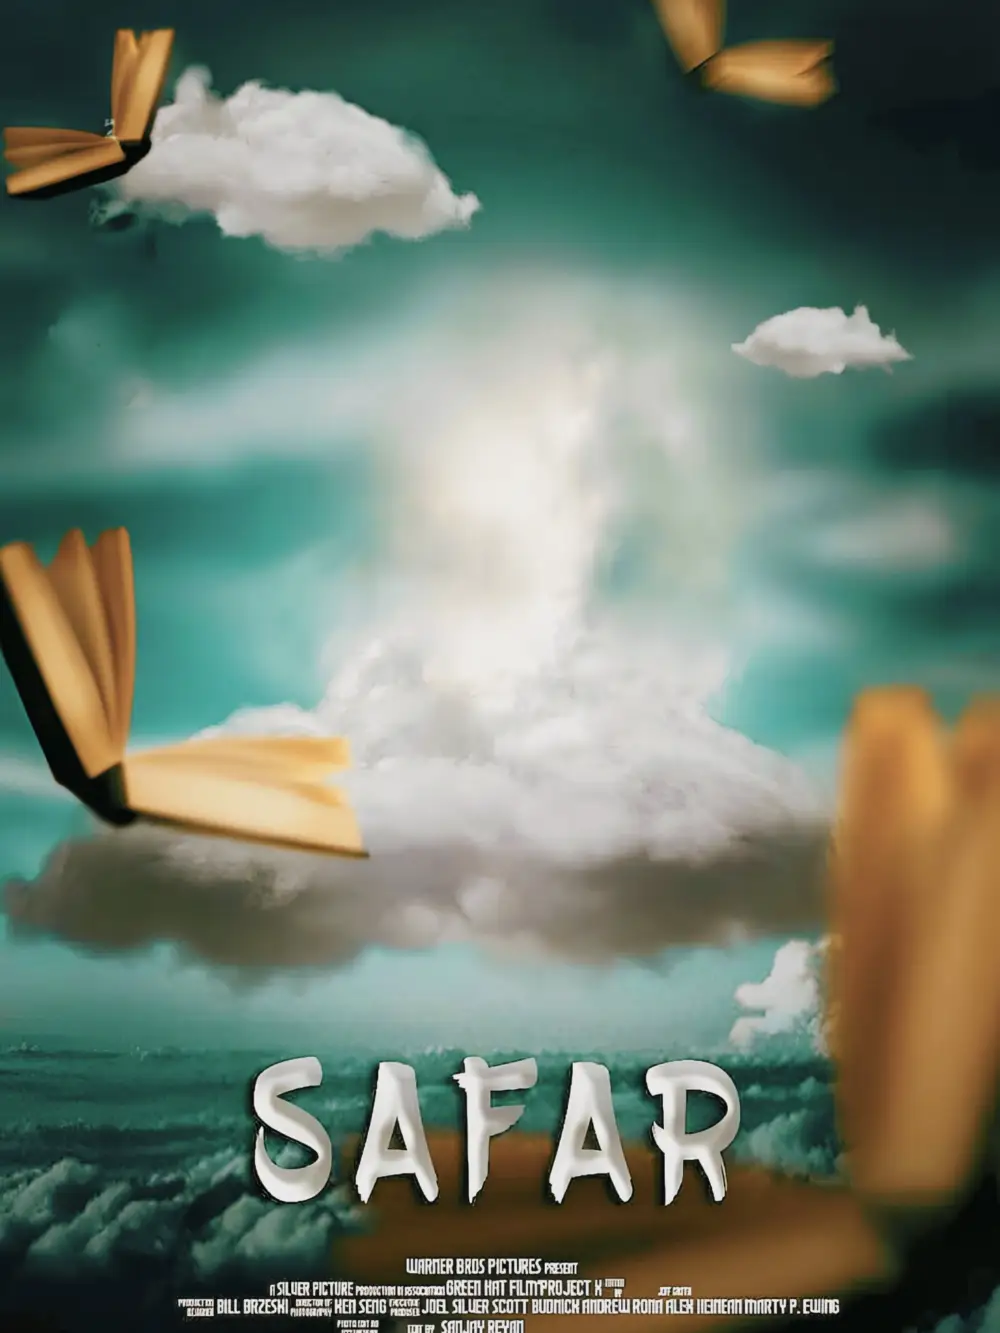 Download Safar Picsart Editing Background Full Hd Free!!